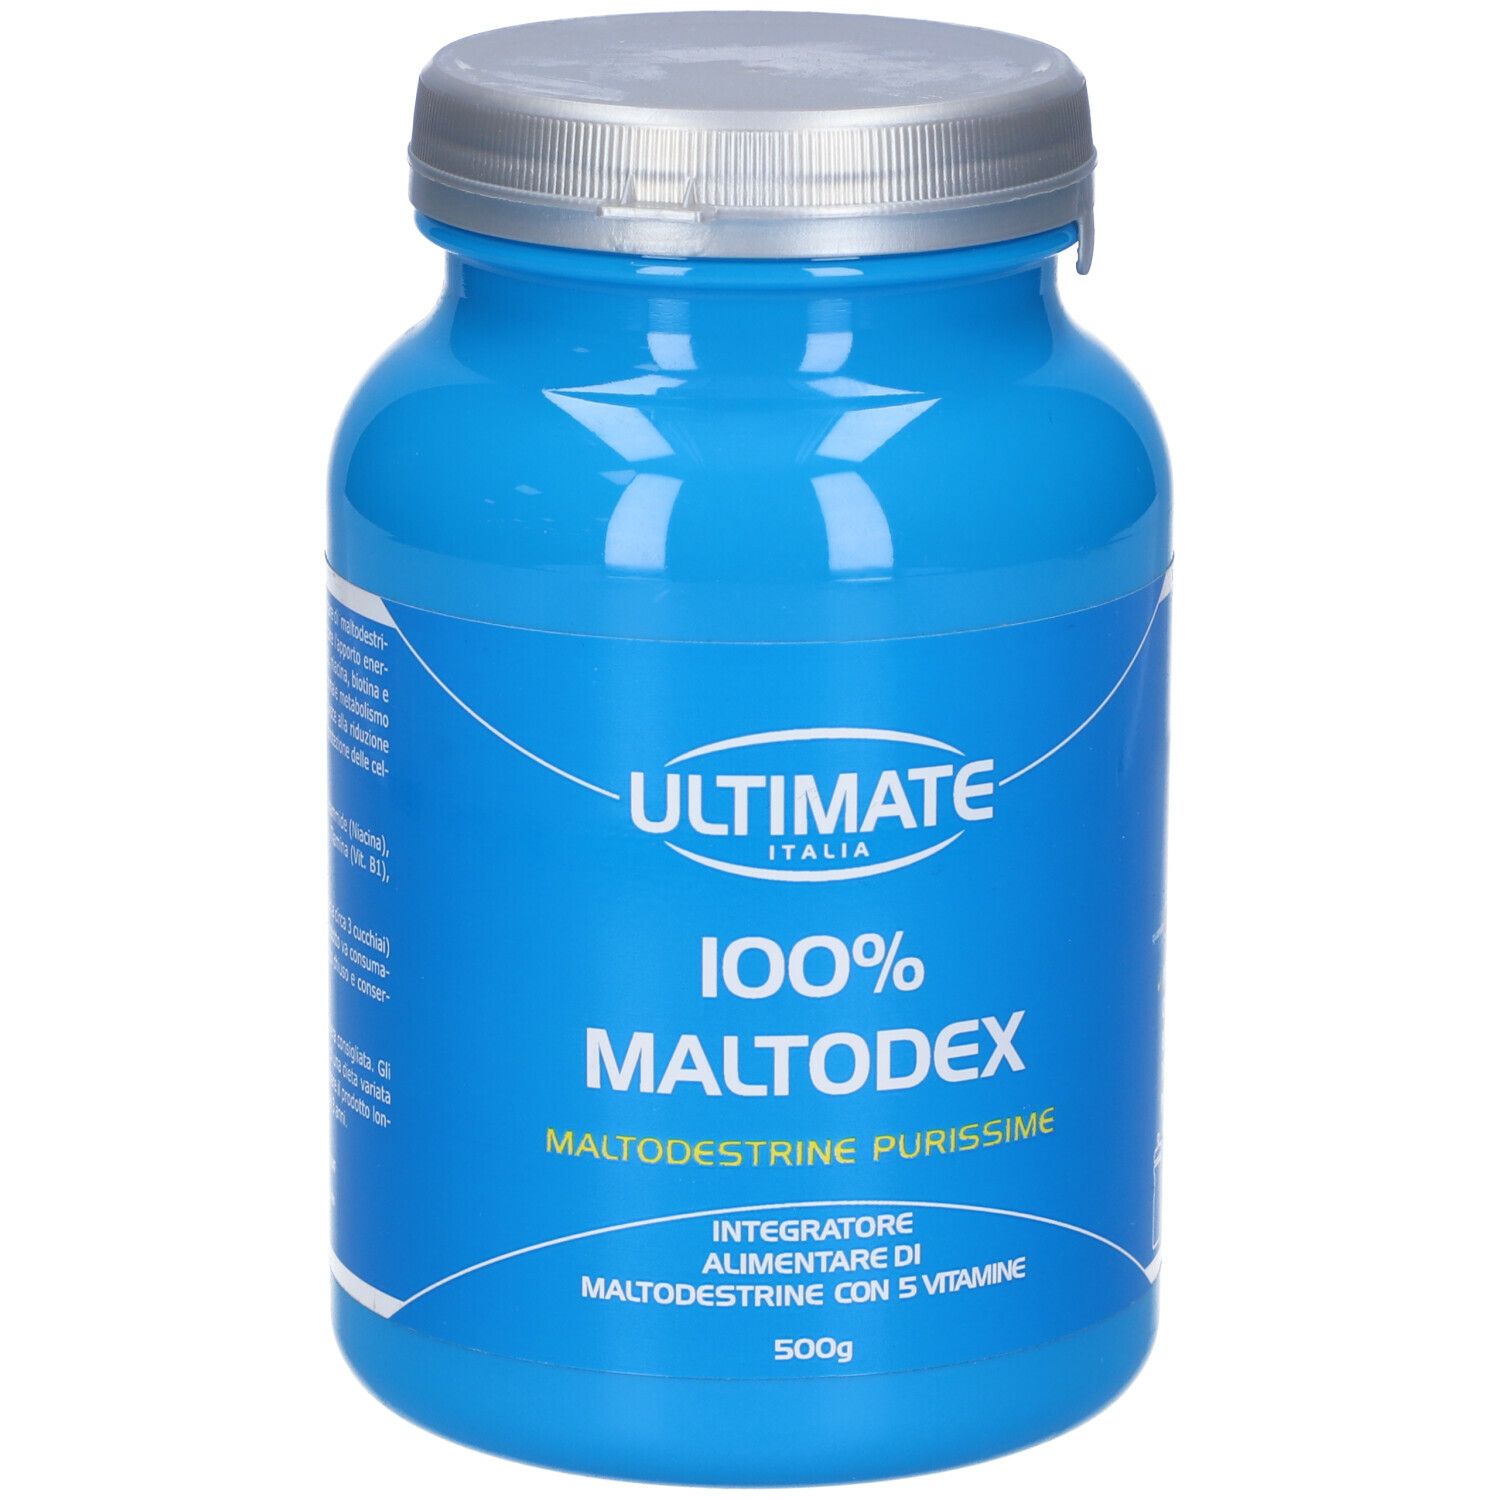 Ultimate 100% Maltodex 500G